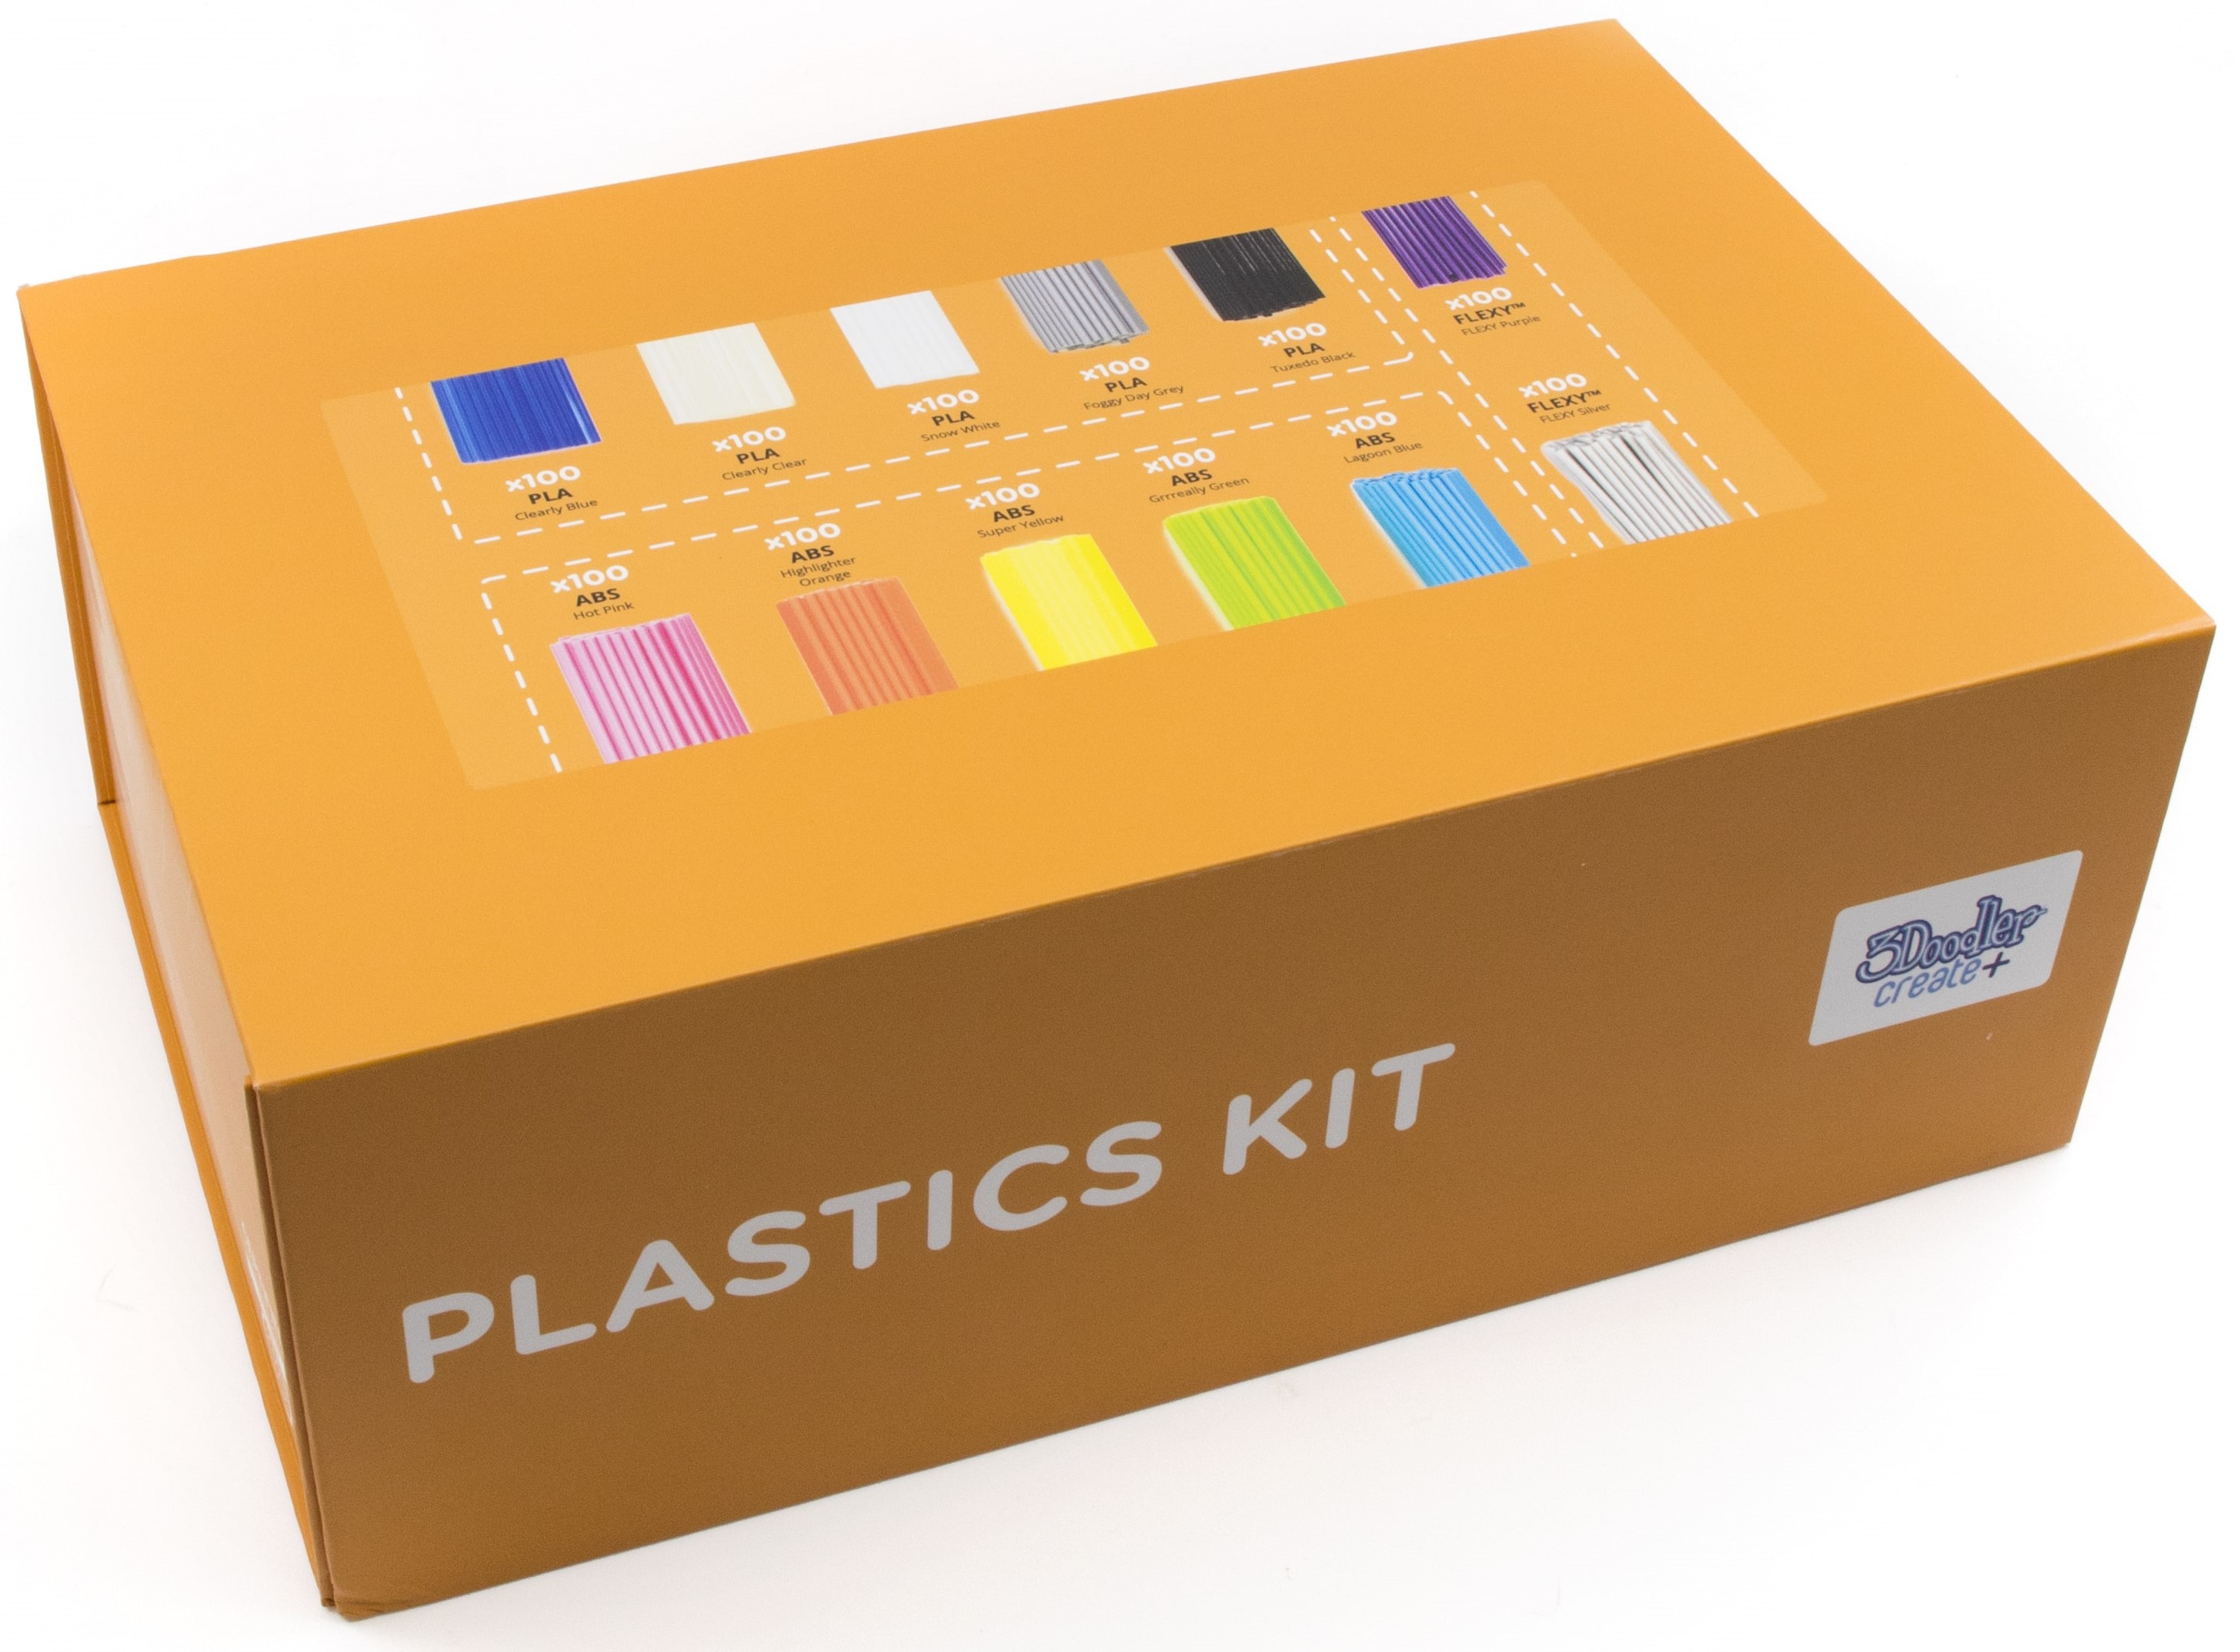 Create+_Plastic Kit_Full_Closed-min33